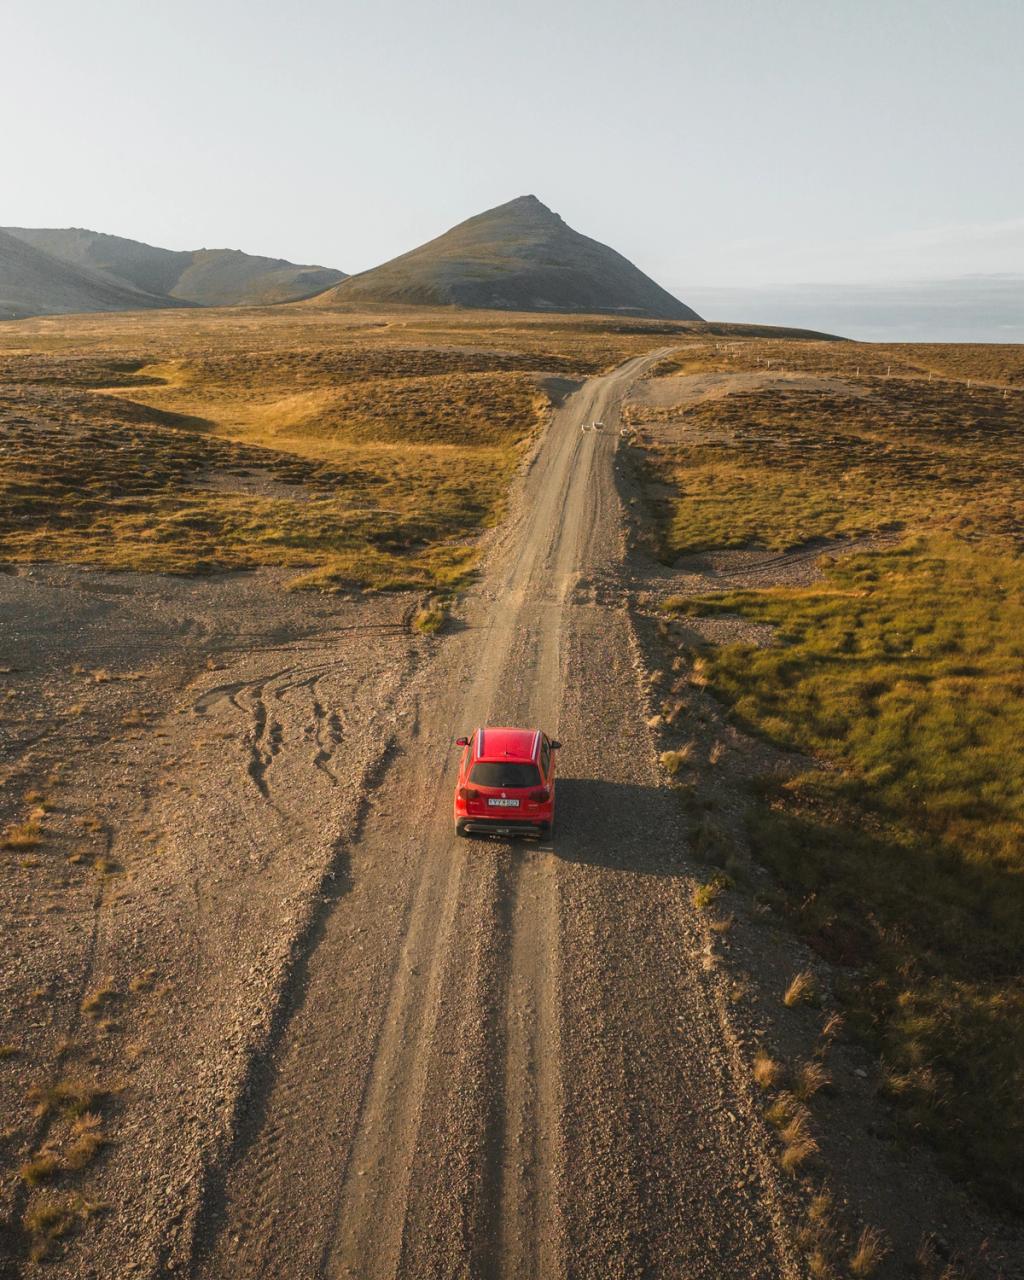 Coche de alquiler Suzuki Vitara 4x4 rojo alejándose de la cámara en Islandia.